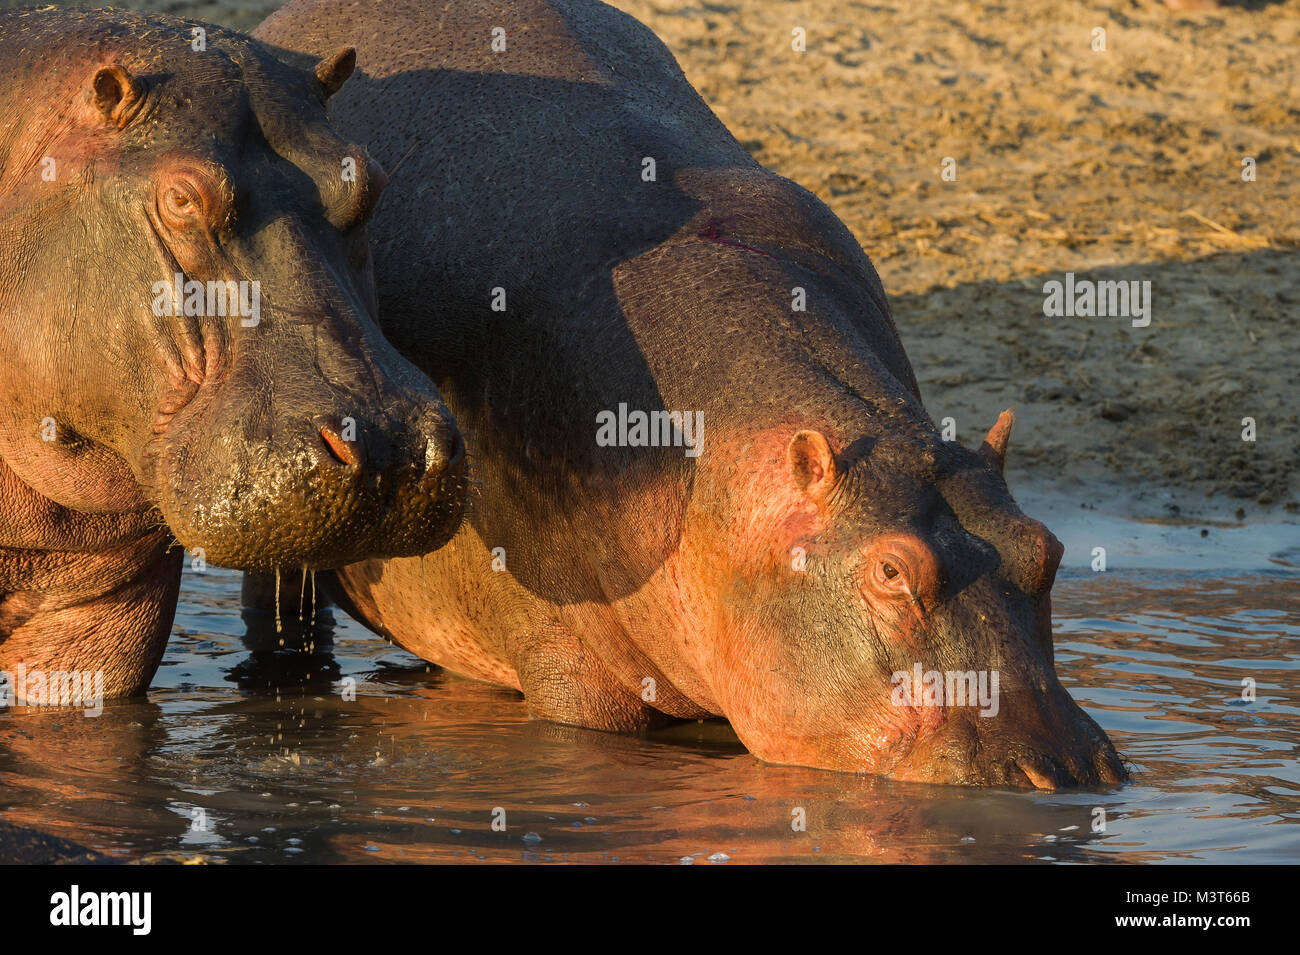 Two hippopotamus (Hippopotamus amphibius) close together while entering water. Katavi National Park, Tanzania. Stock Photo